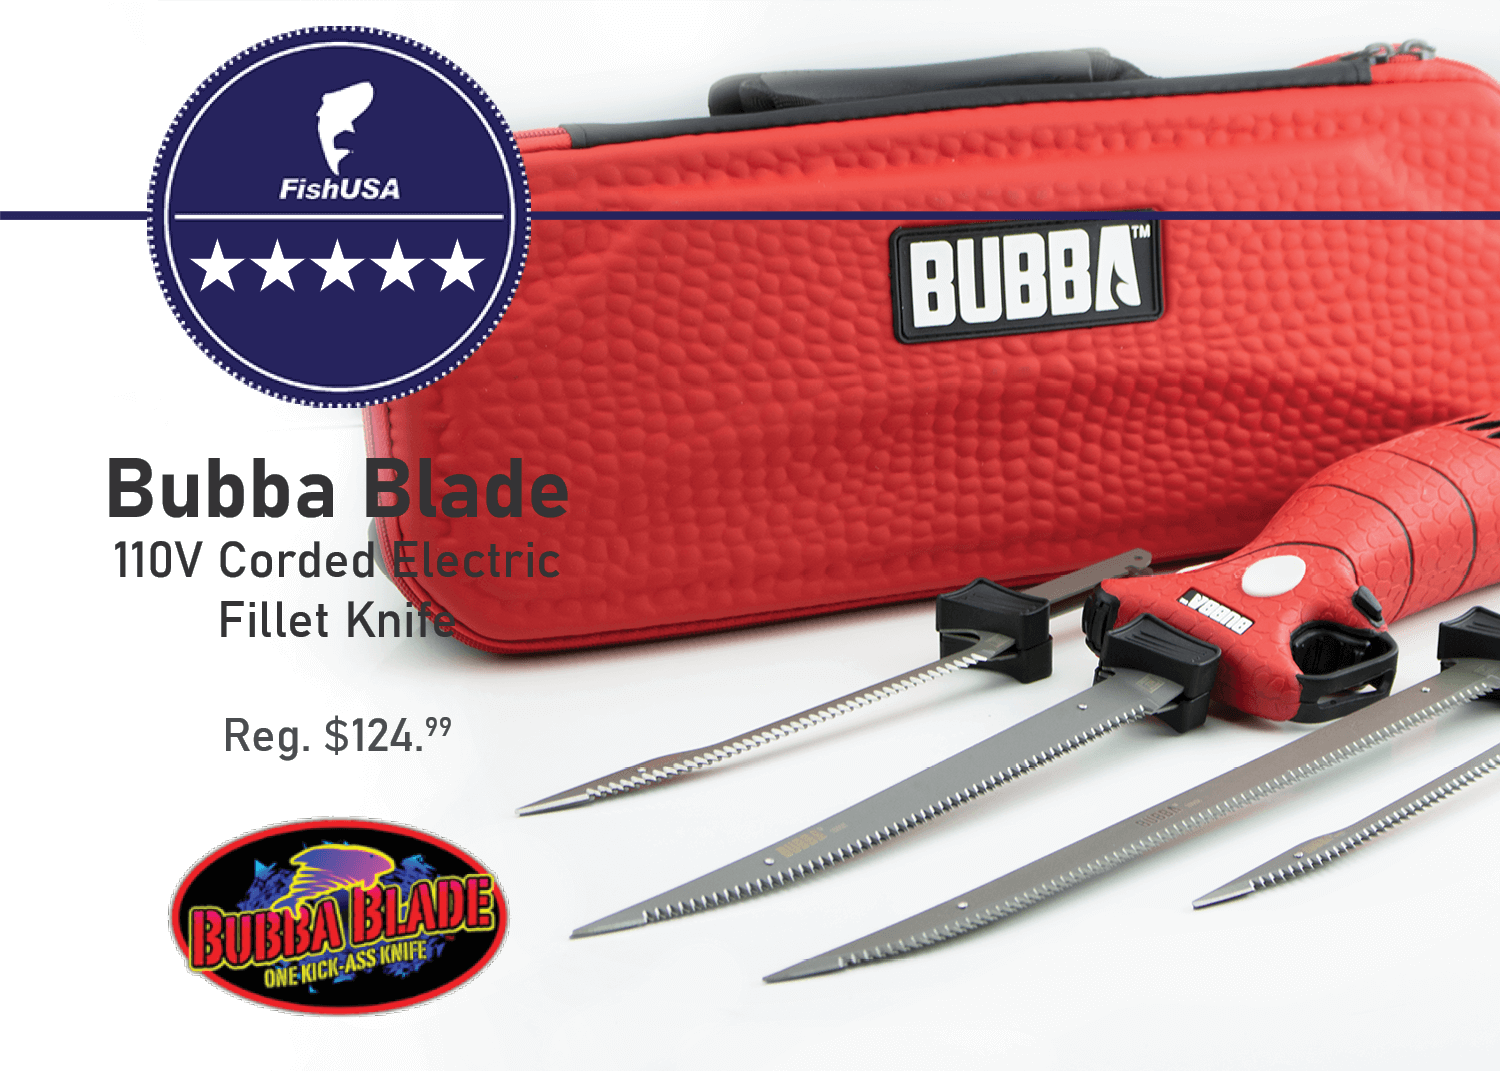 Bubba Blade 110V Corded Electric Fillet Knife